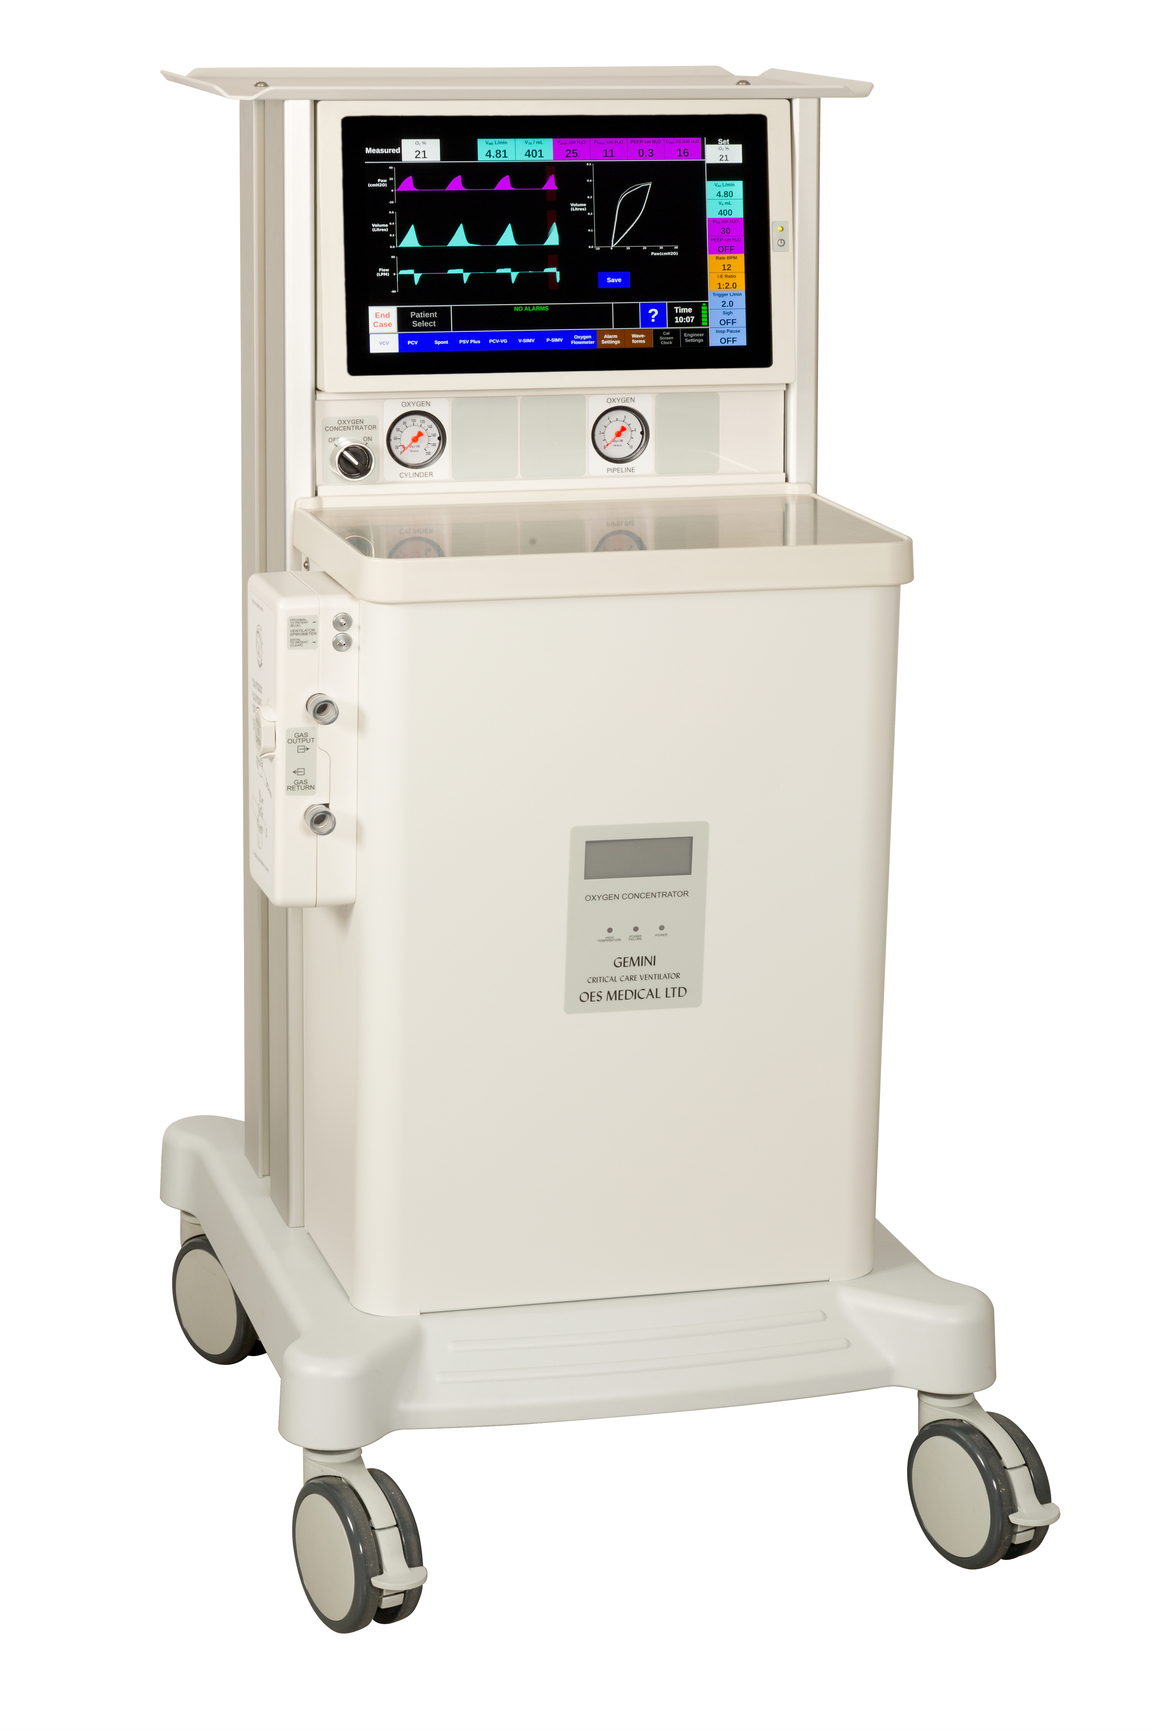 OES Medical launches ICU Ventilator at Arab Health 2022 - Exhibitor news - Arab Health